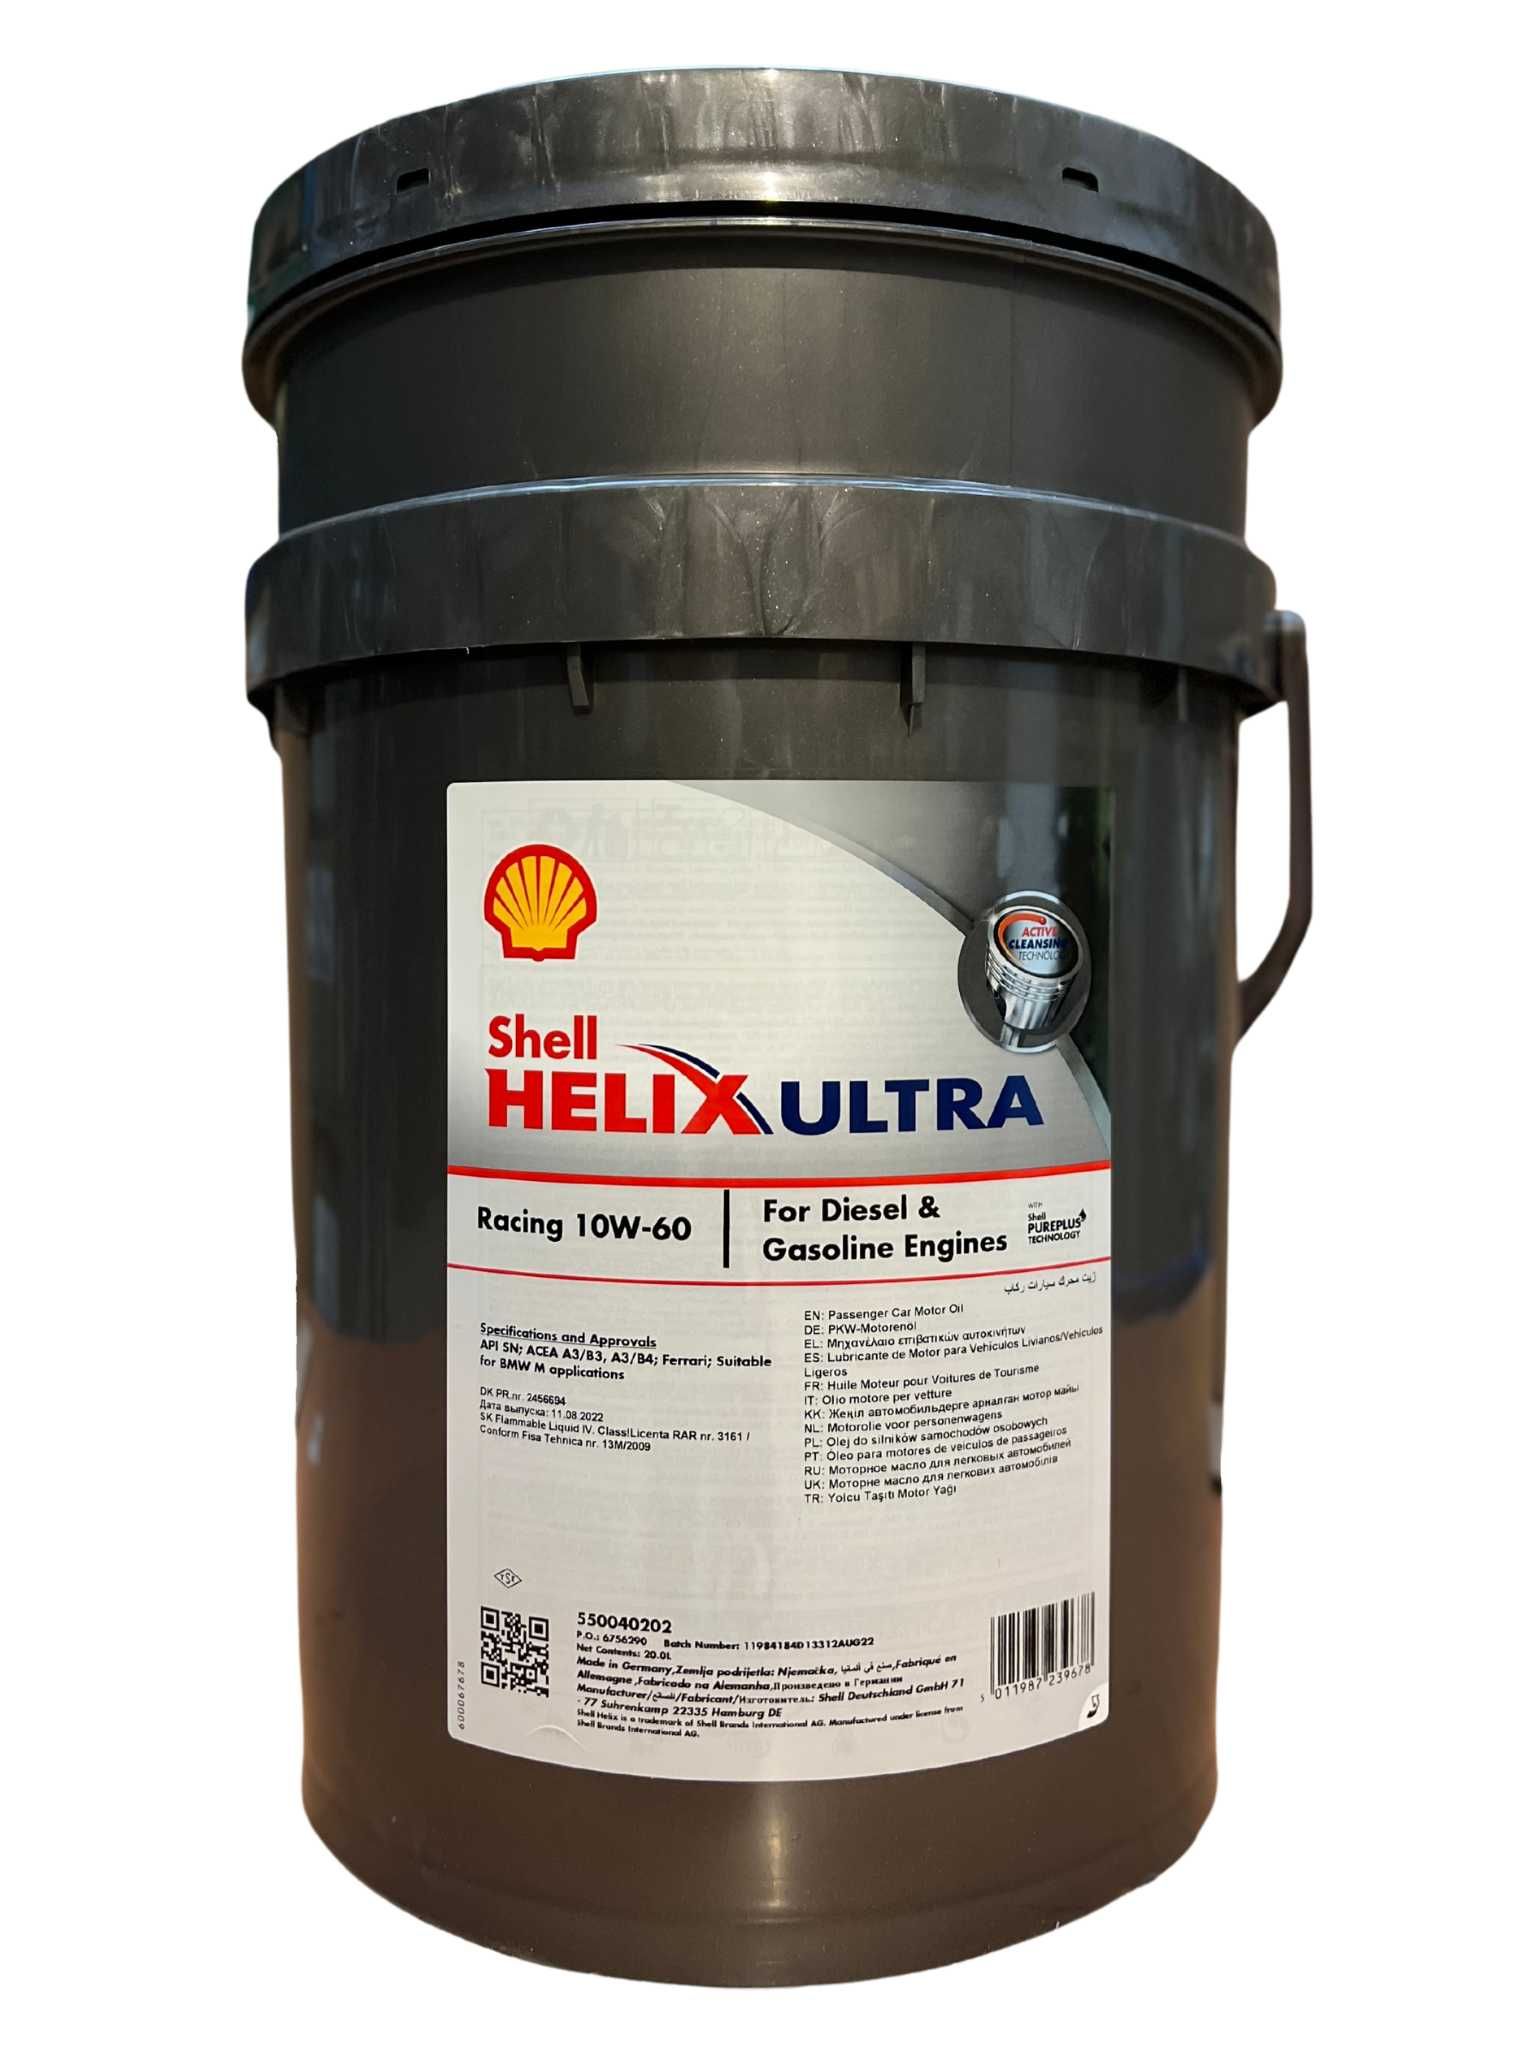 Shell Helix Ultra Racing 10W-60 20 Liter